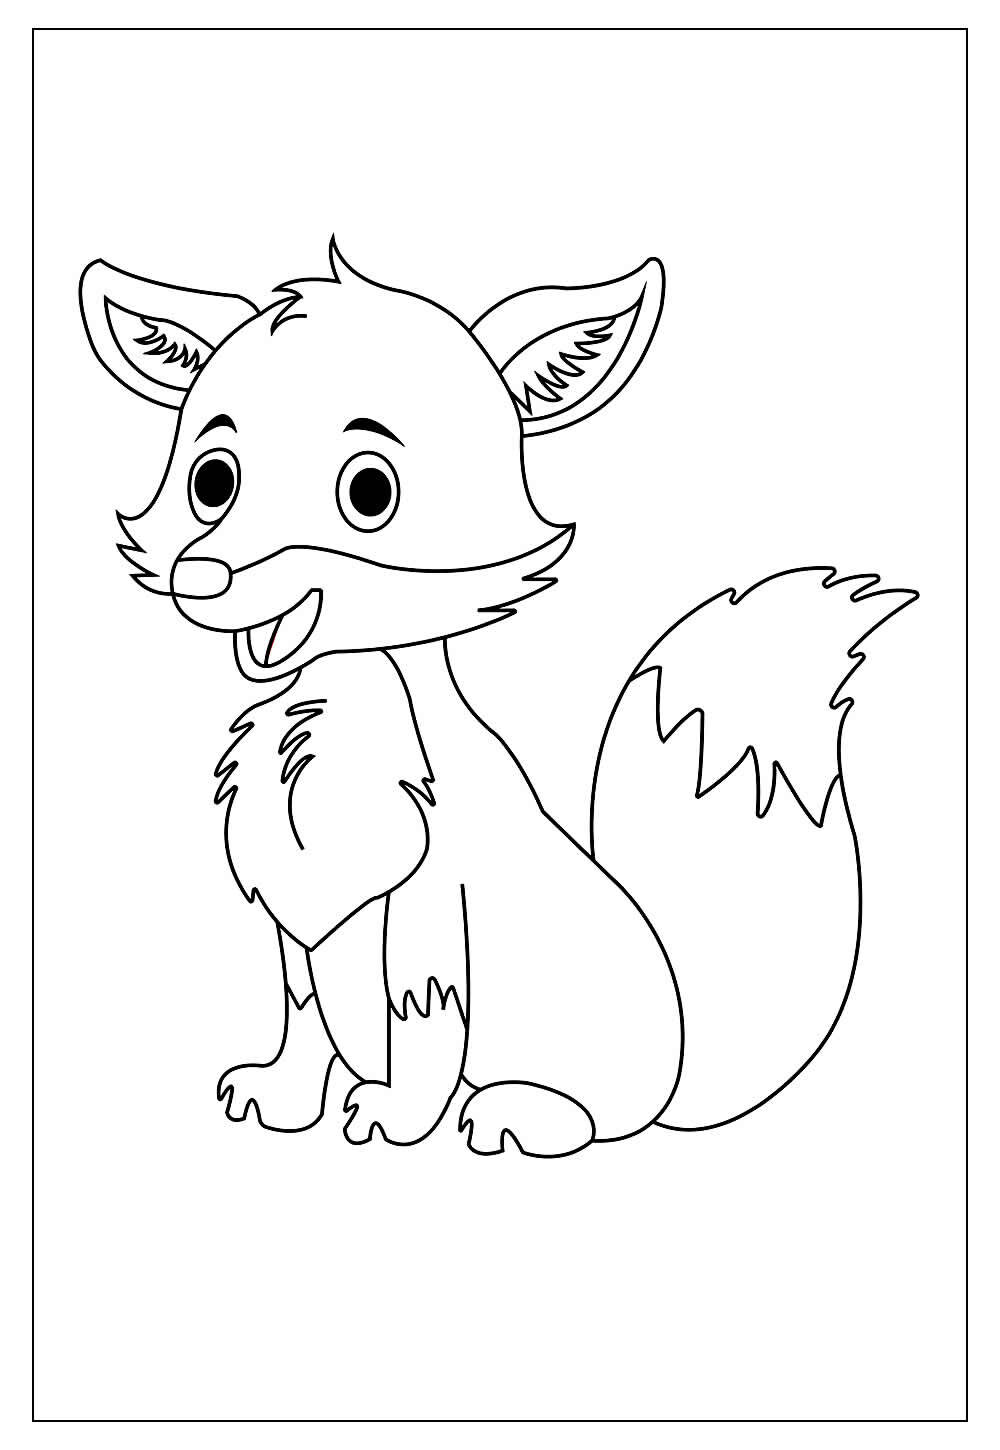 Desenho de Raposa para adultos para colorir - Tudodesenhos